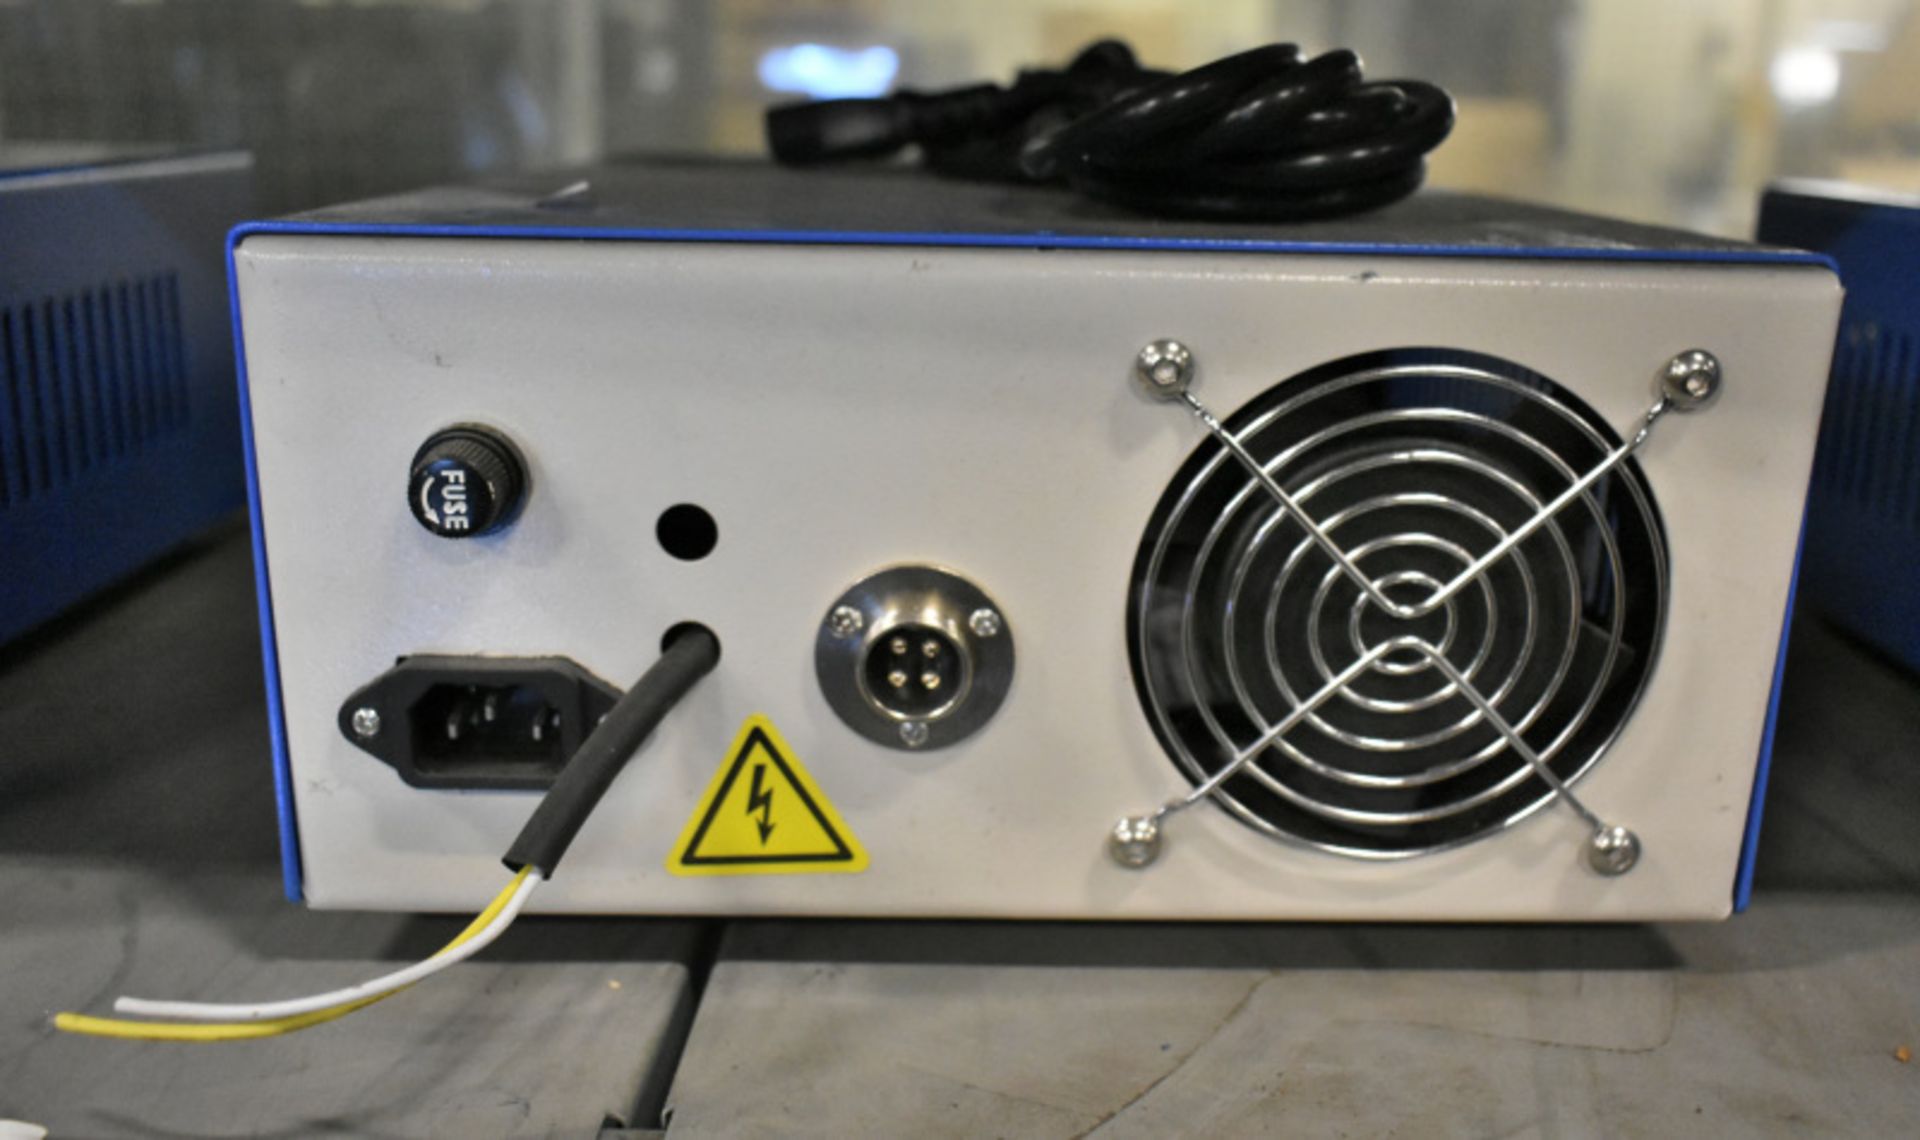 DCR MAM DG-310 Mask Attaching Electrical Unit 200-250V - 50Mhz - Image 4 of 4